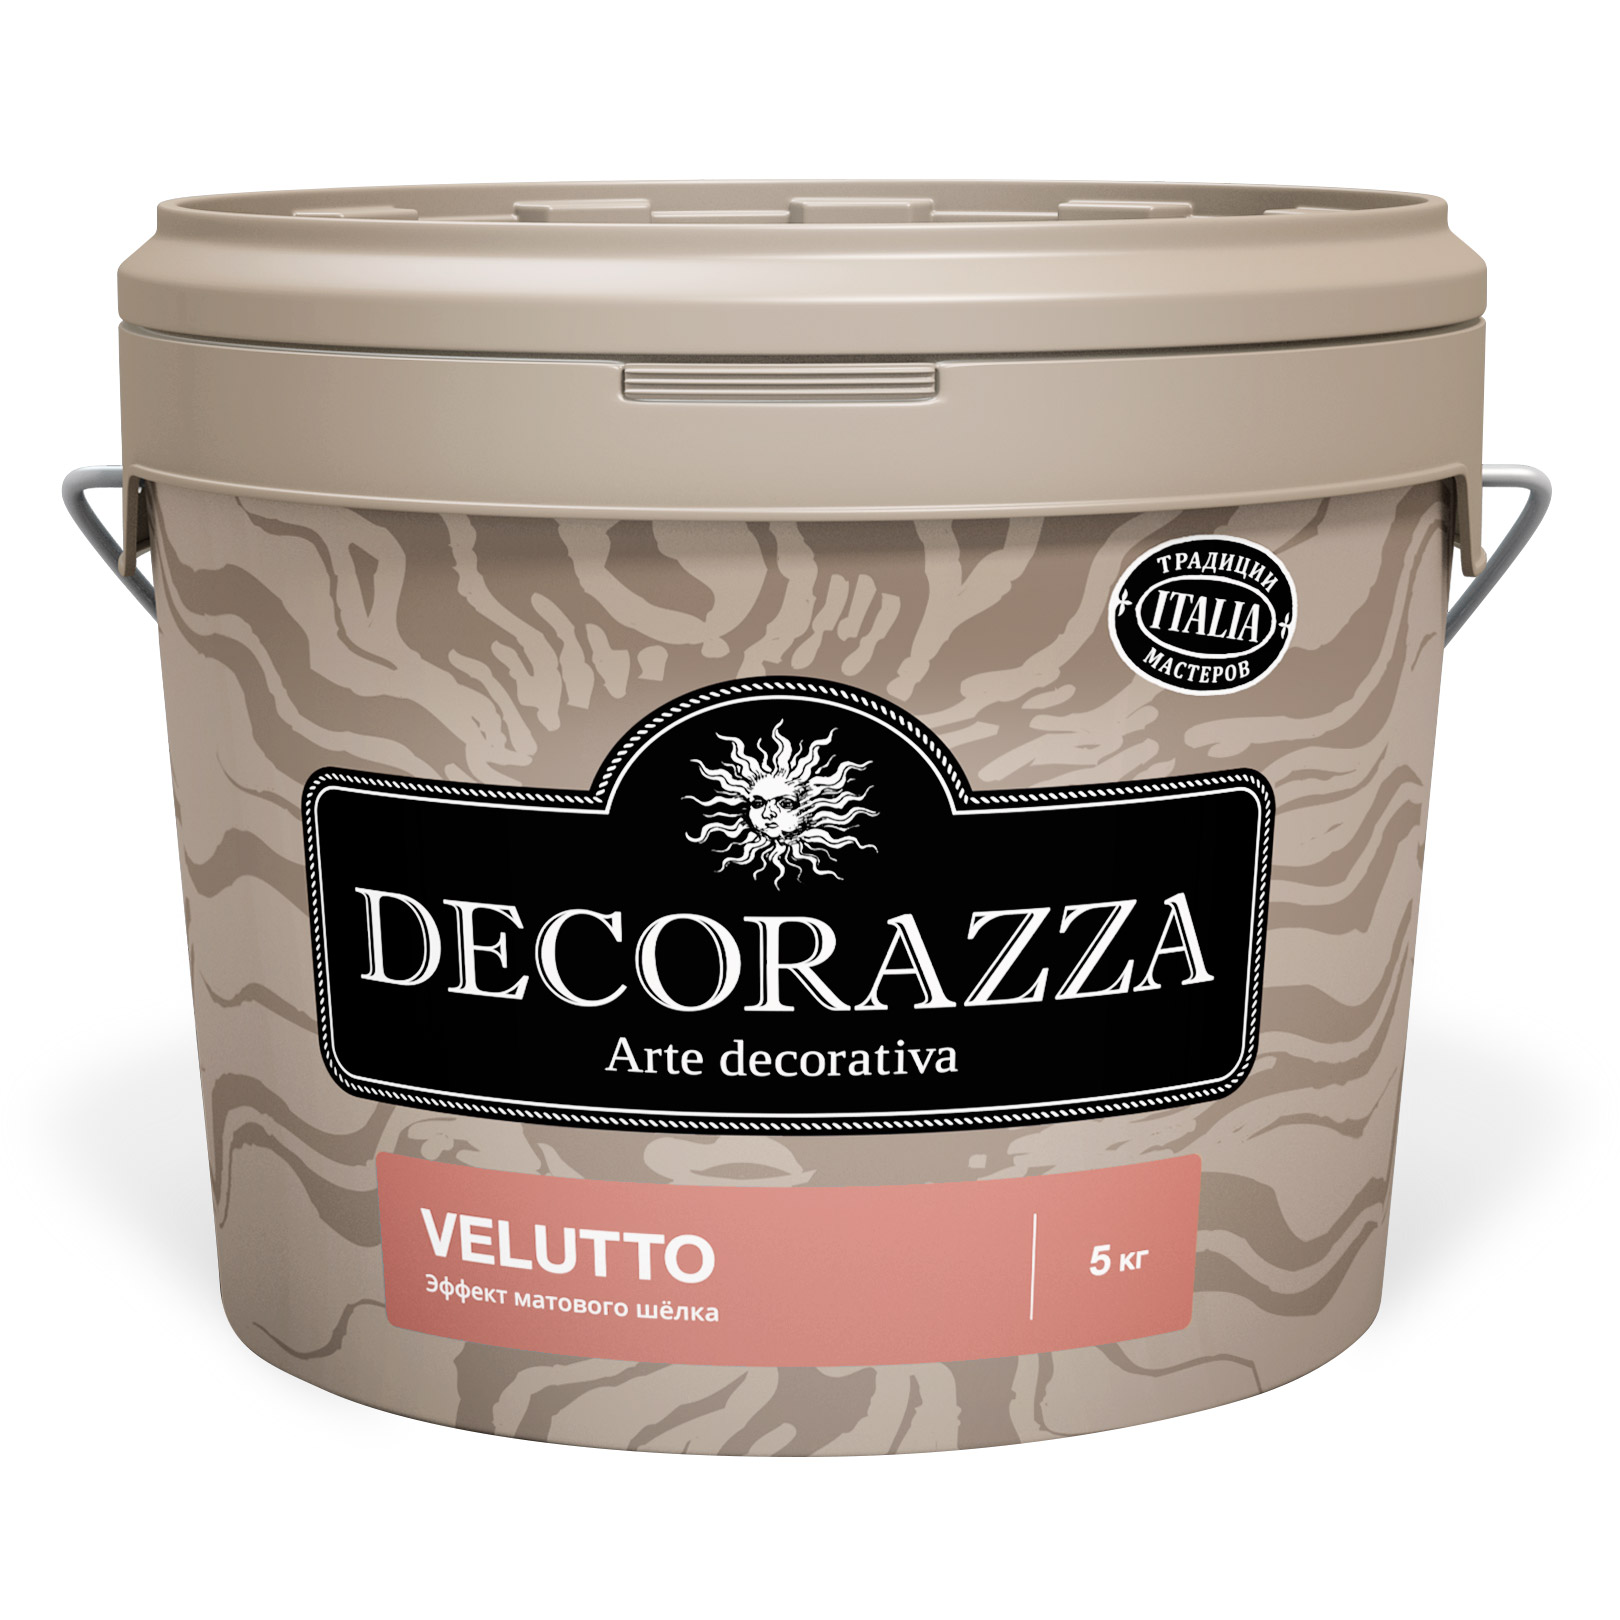 Краска Decorazza velluto бархат 5 кг (DVT001-5) краска decorazza seta argento база серая 5 кг dst001 5